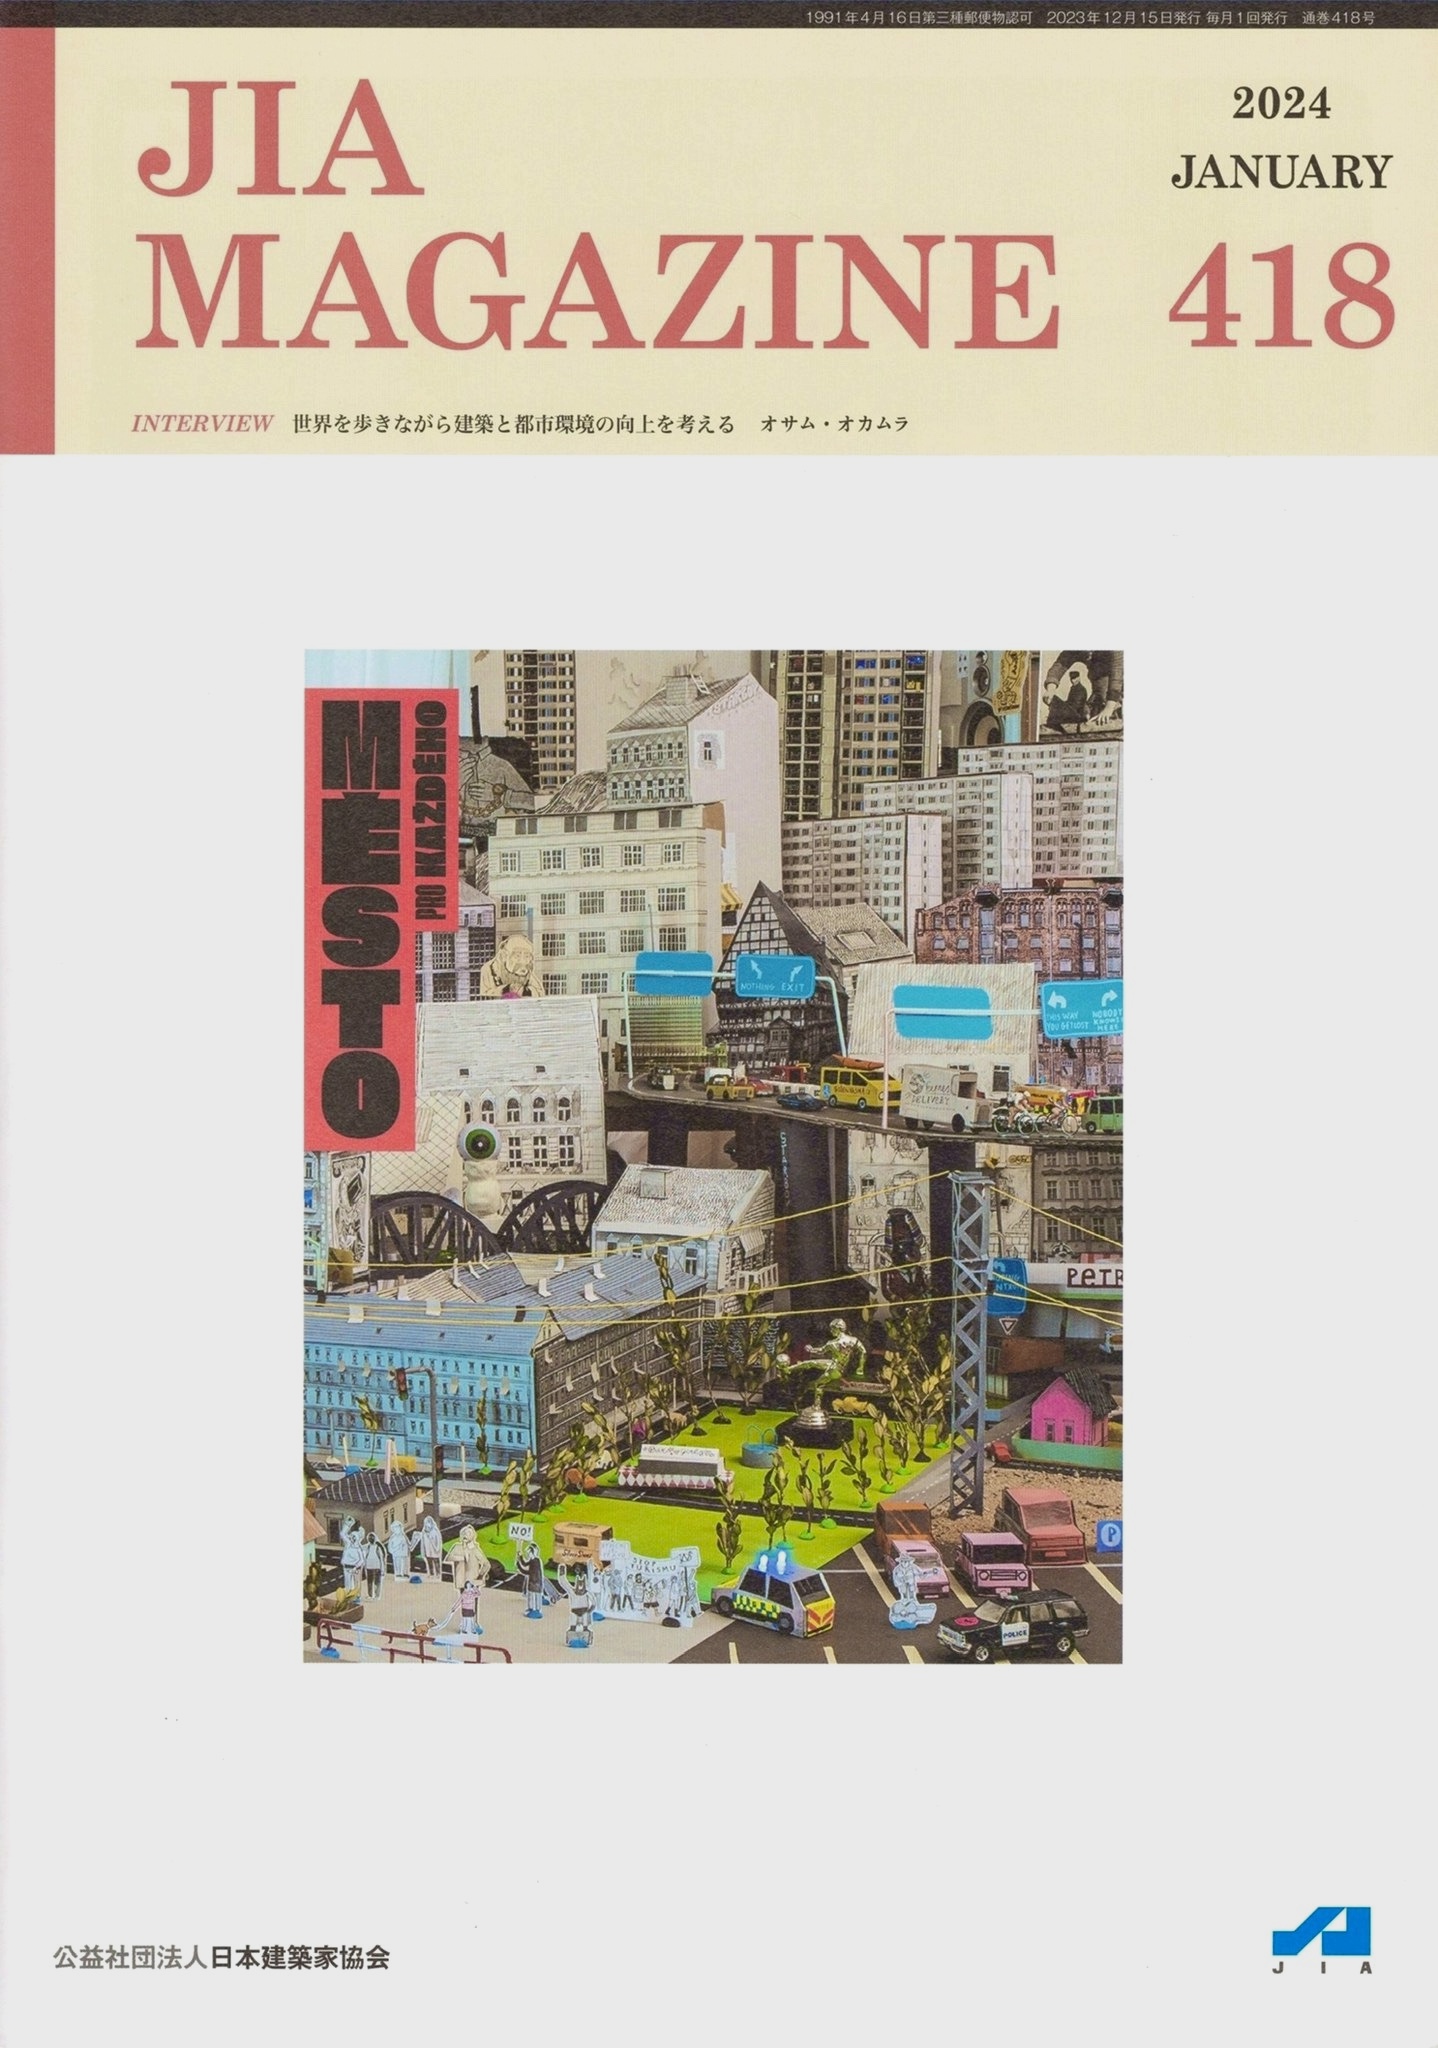 The Japan Institute of Architects Magazine – Interview with Osamu Okamura